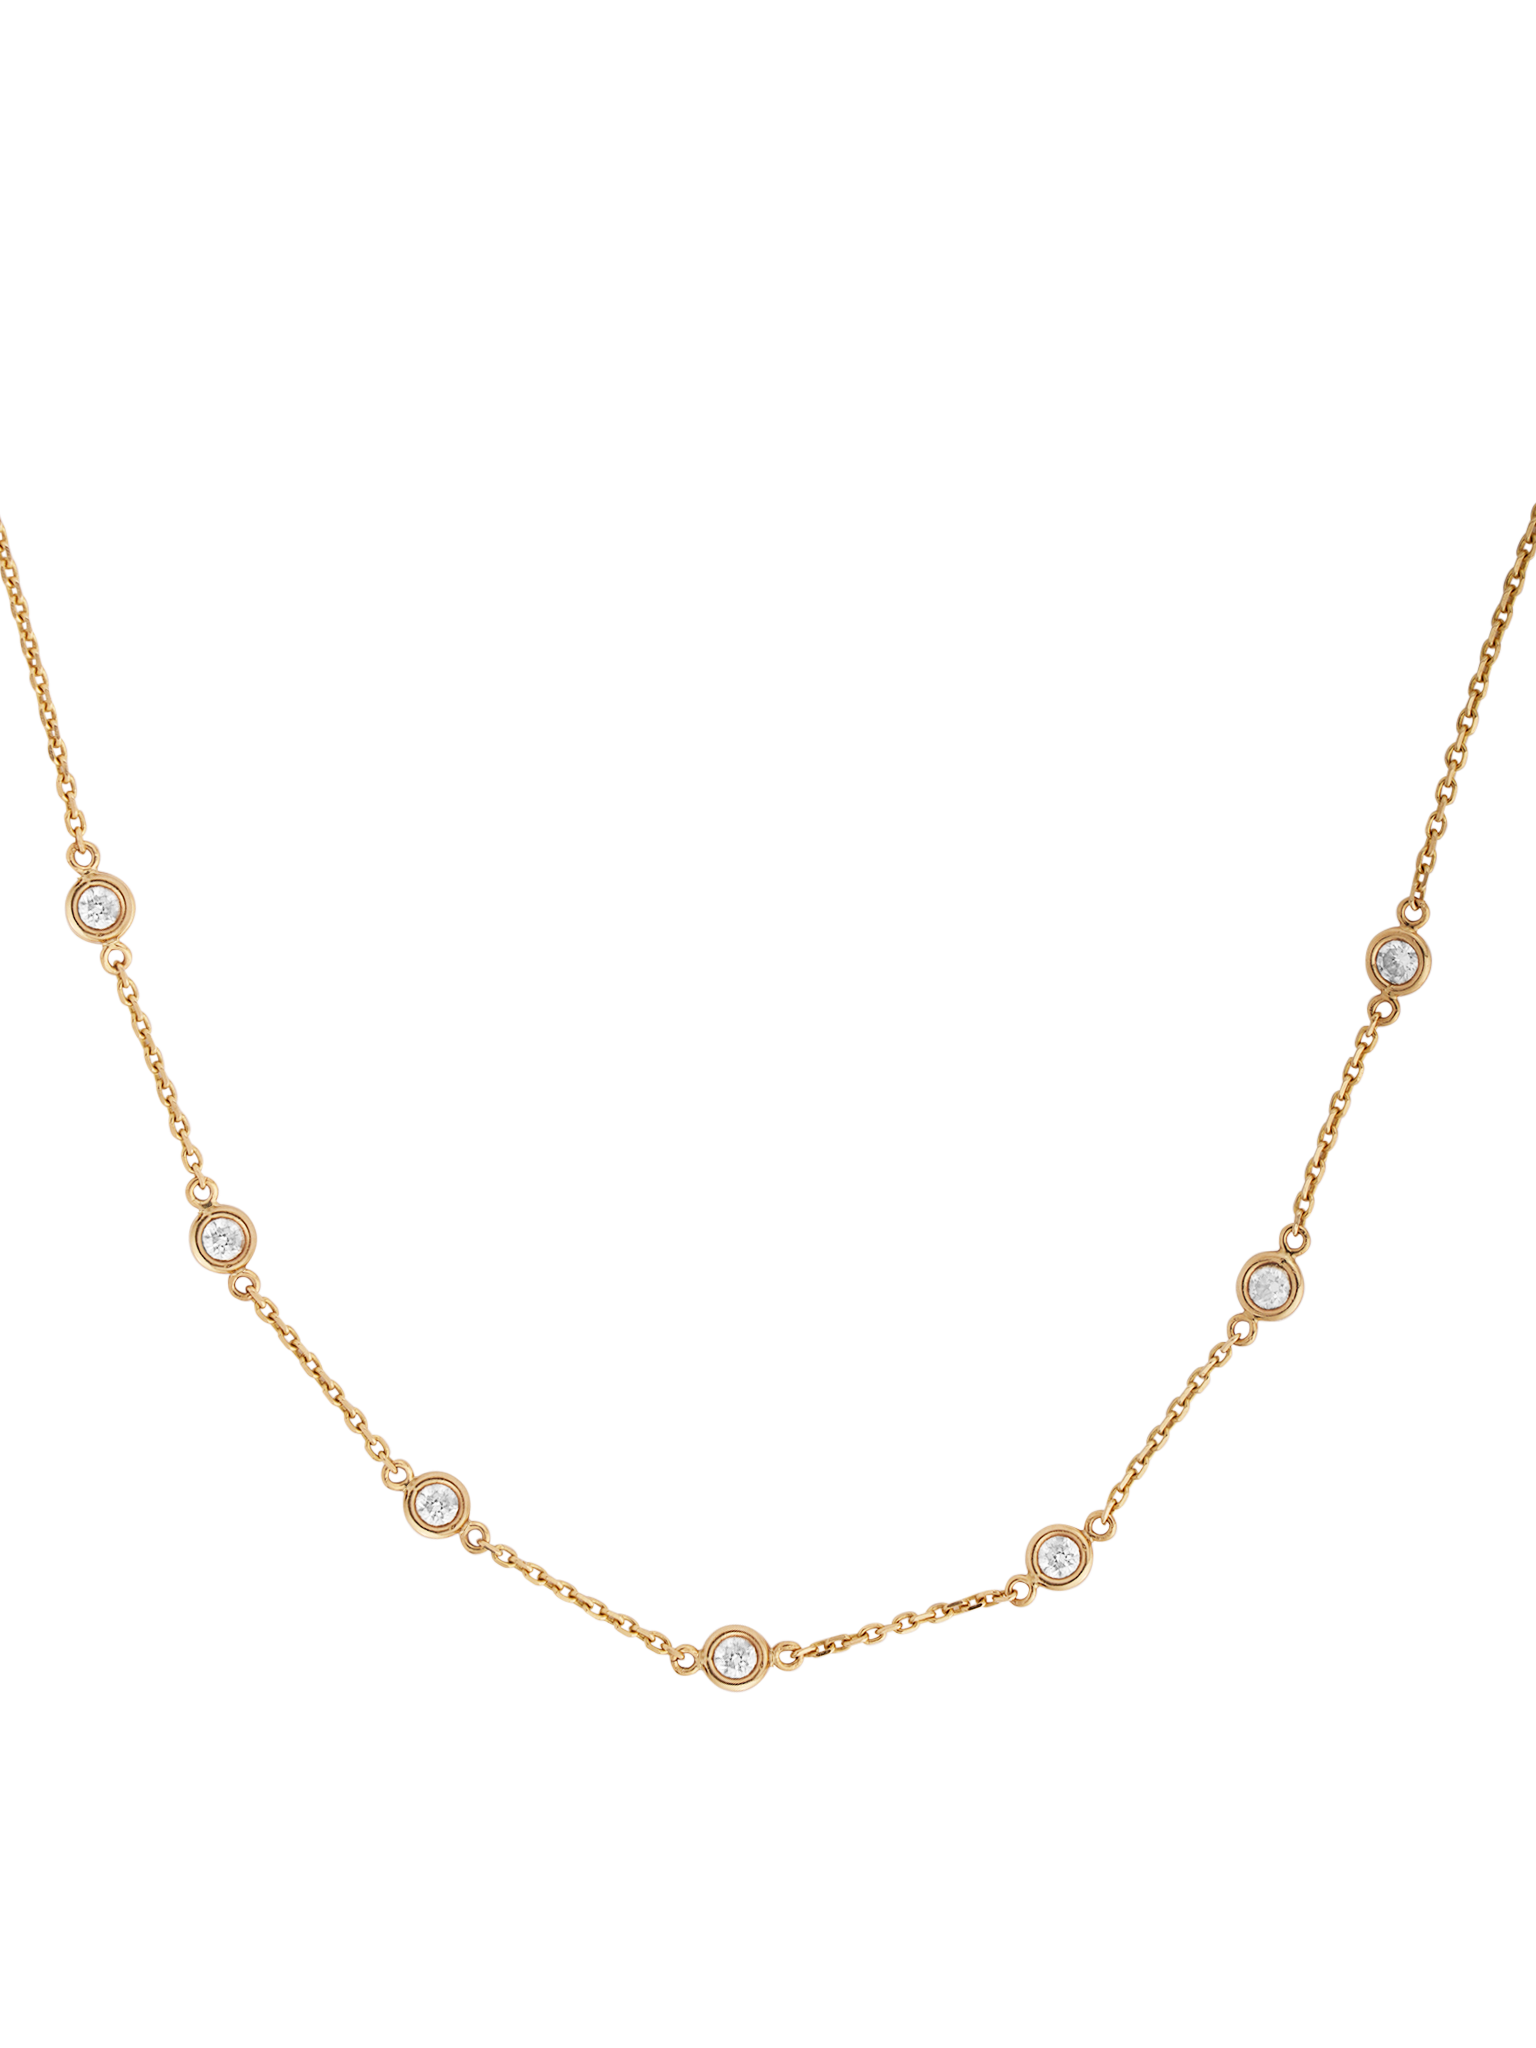 14k yellow gold Diamond cut chain with 7 bezel set diamonds, 16" length